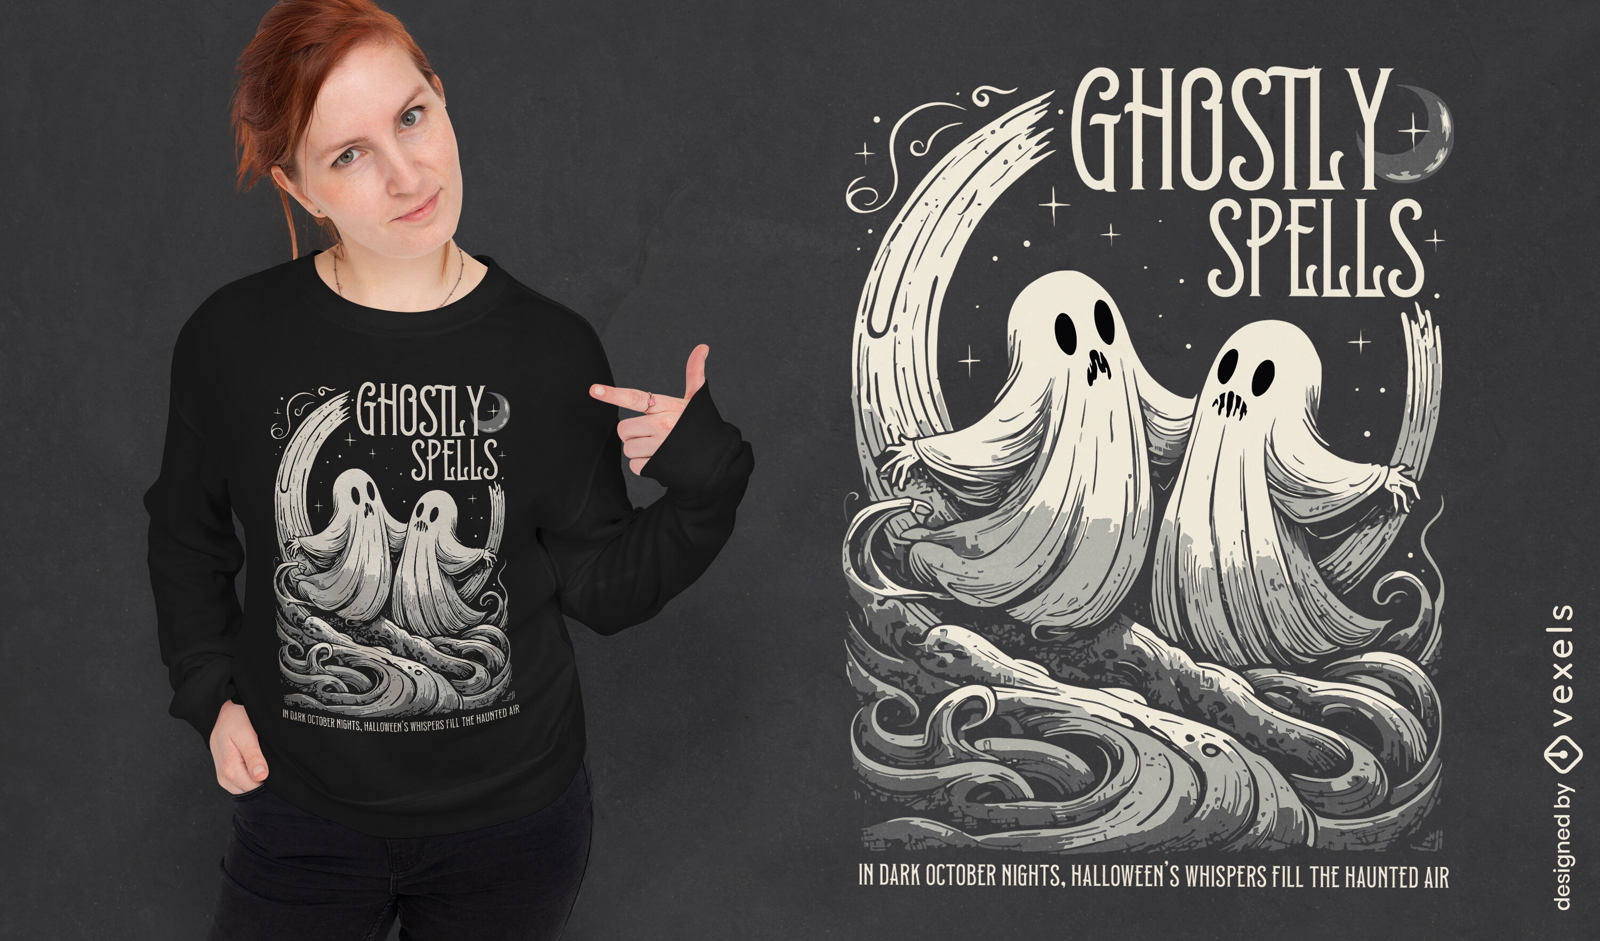 Ghostly spells t-shirt design